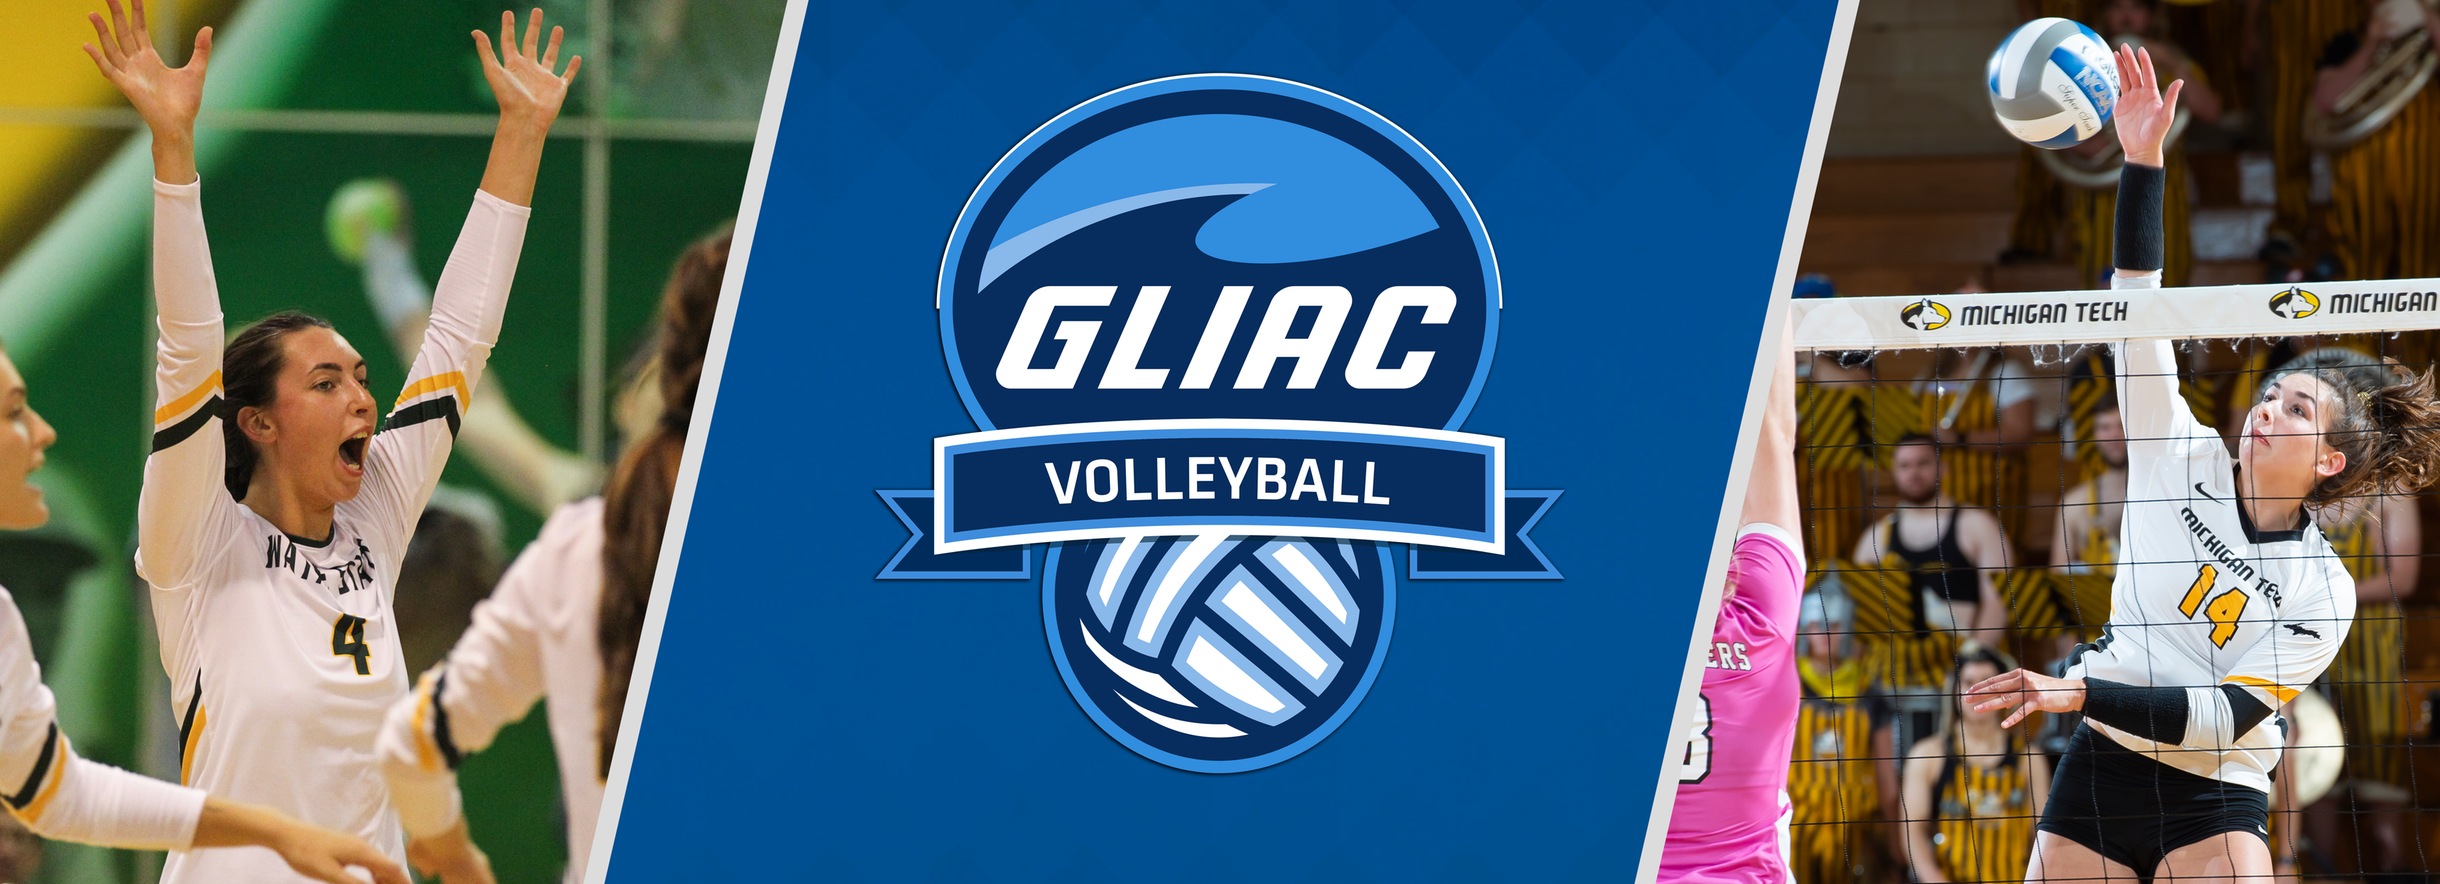 WSU's Krenz, MTU's Ghormley Earn GLIAC Volleyball Players of the Week